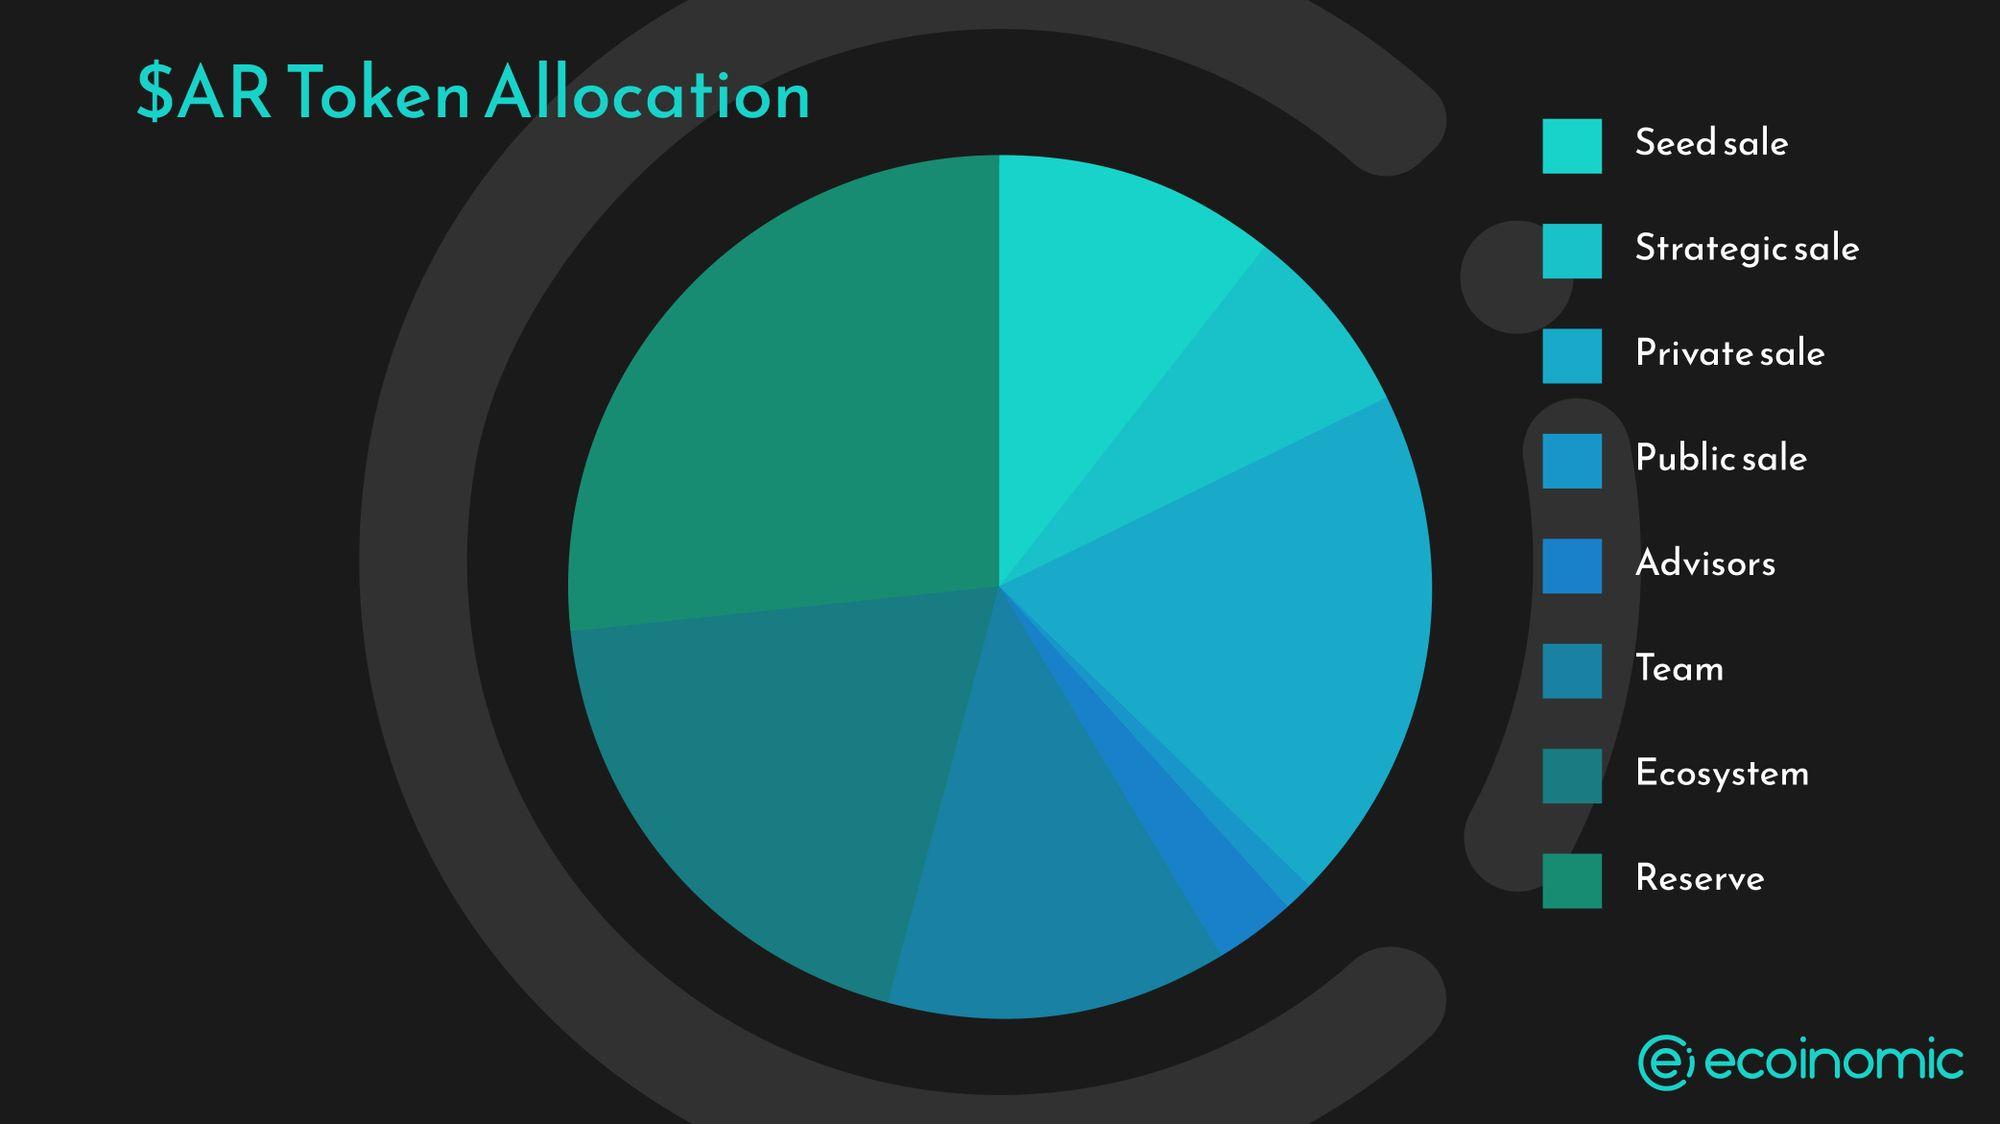 Arweave (AR) token allocation